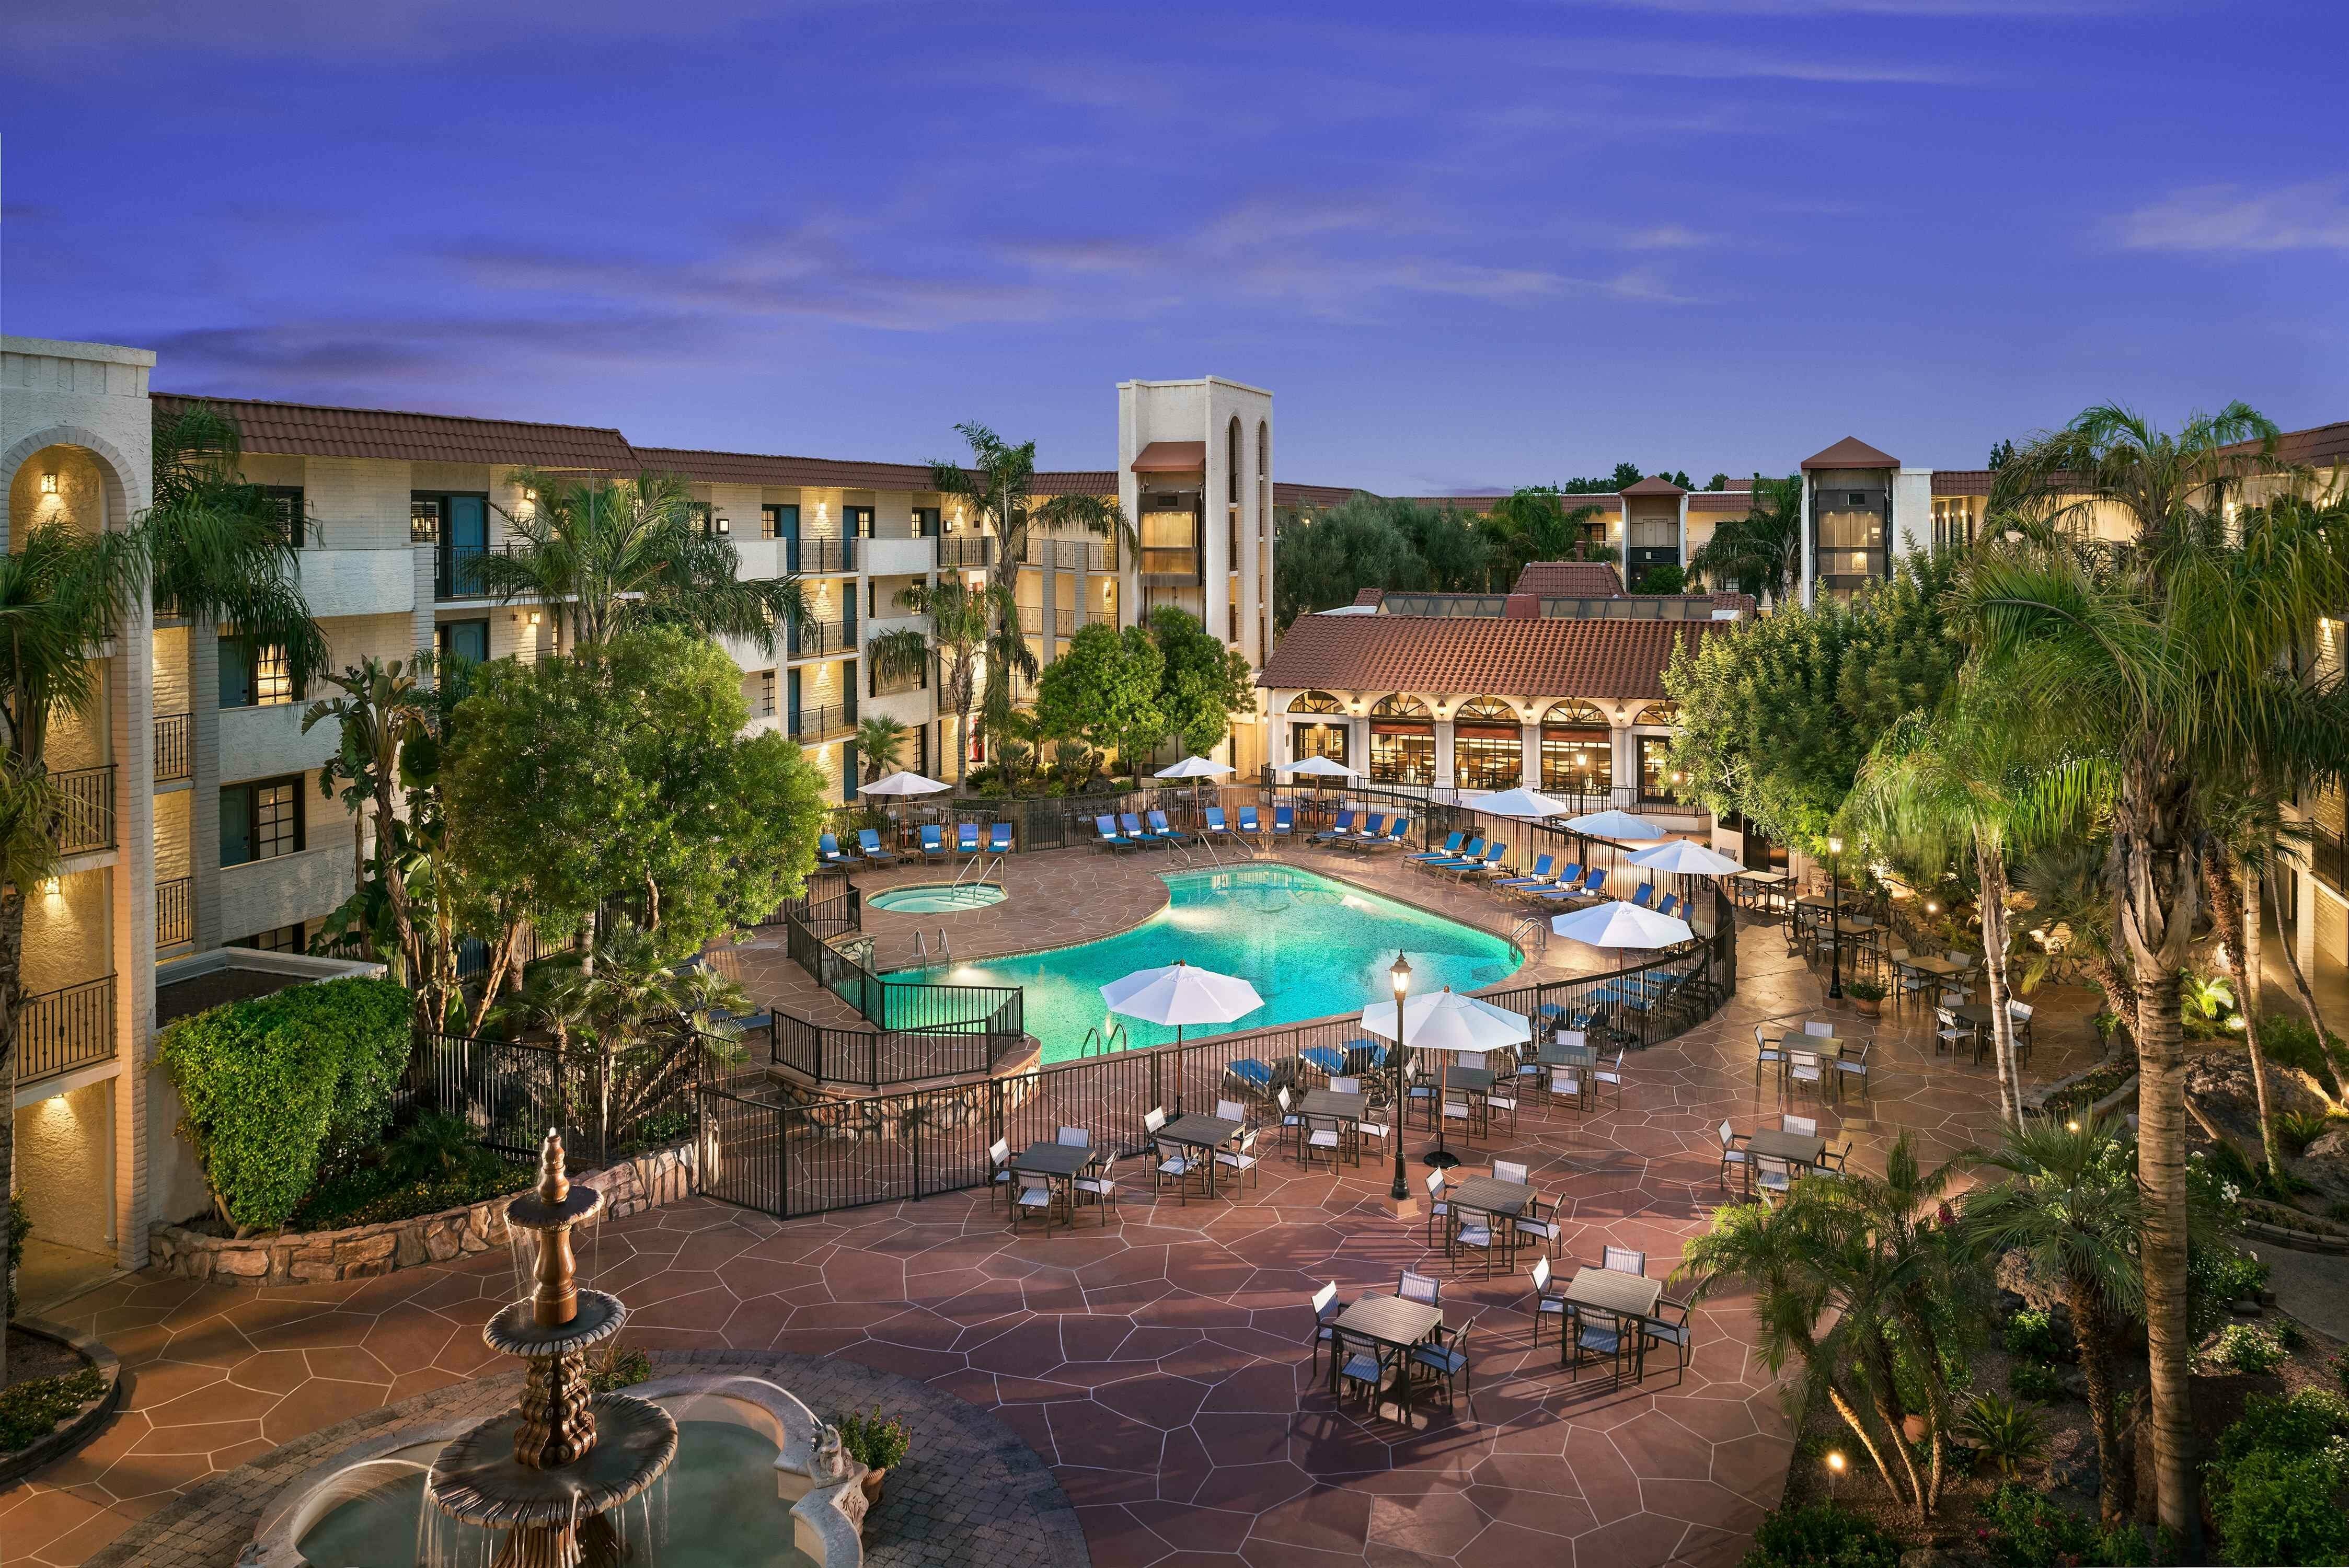 Photo of Embassy Suites by Hilton Scottsdale Resort, Scottsdale, AZ